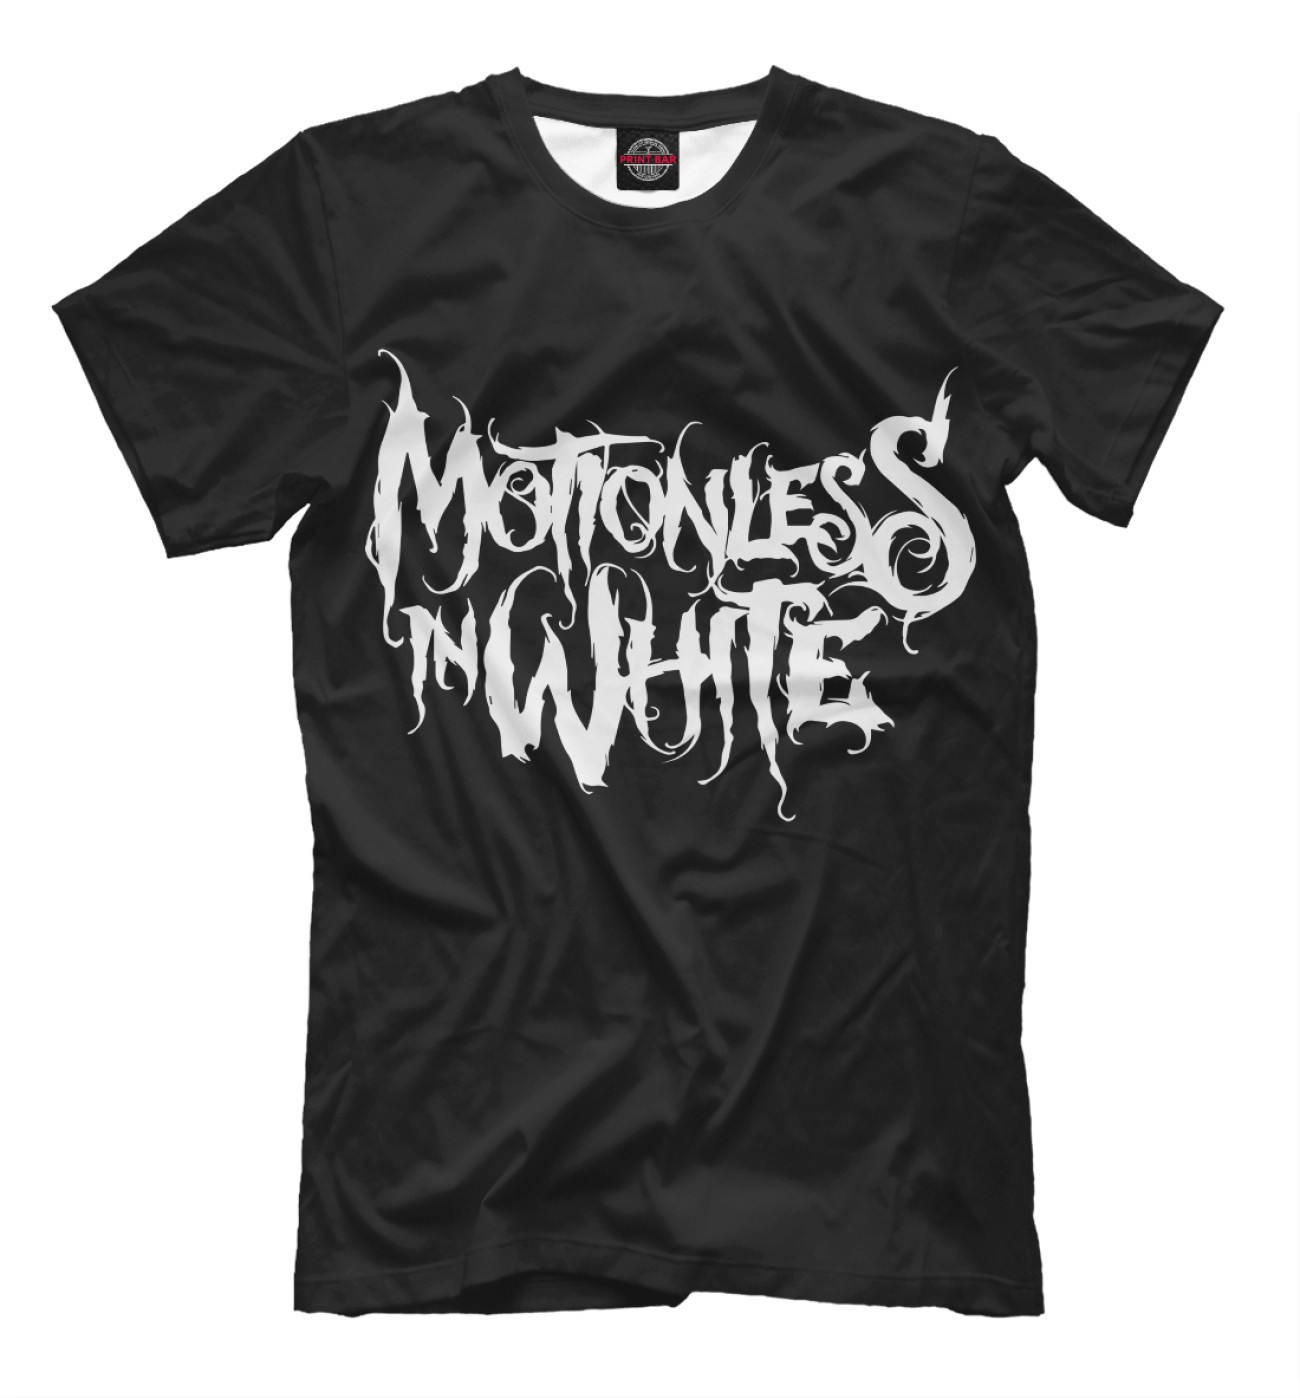 Мужская Футболка Motionless In White, артикул: MZK-578137-fut-2